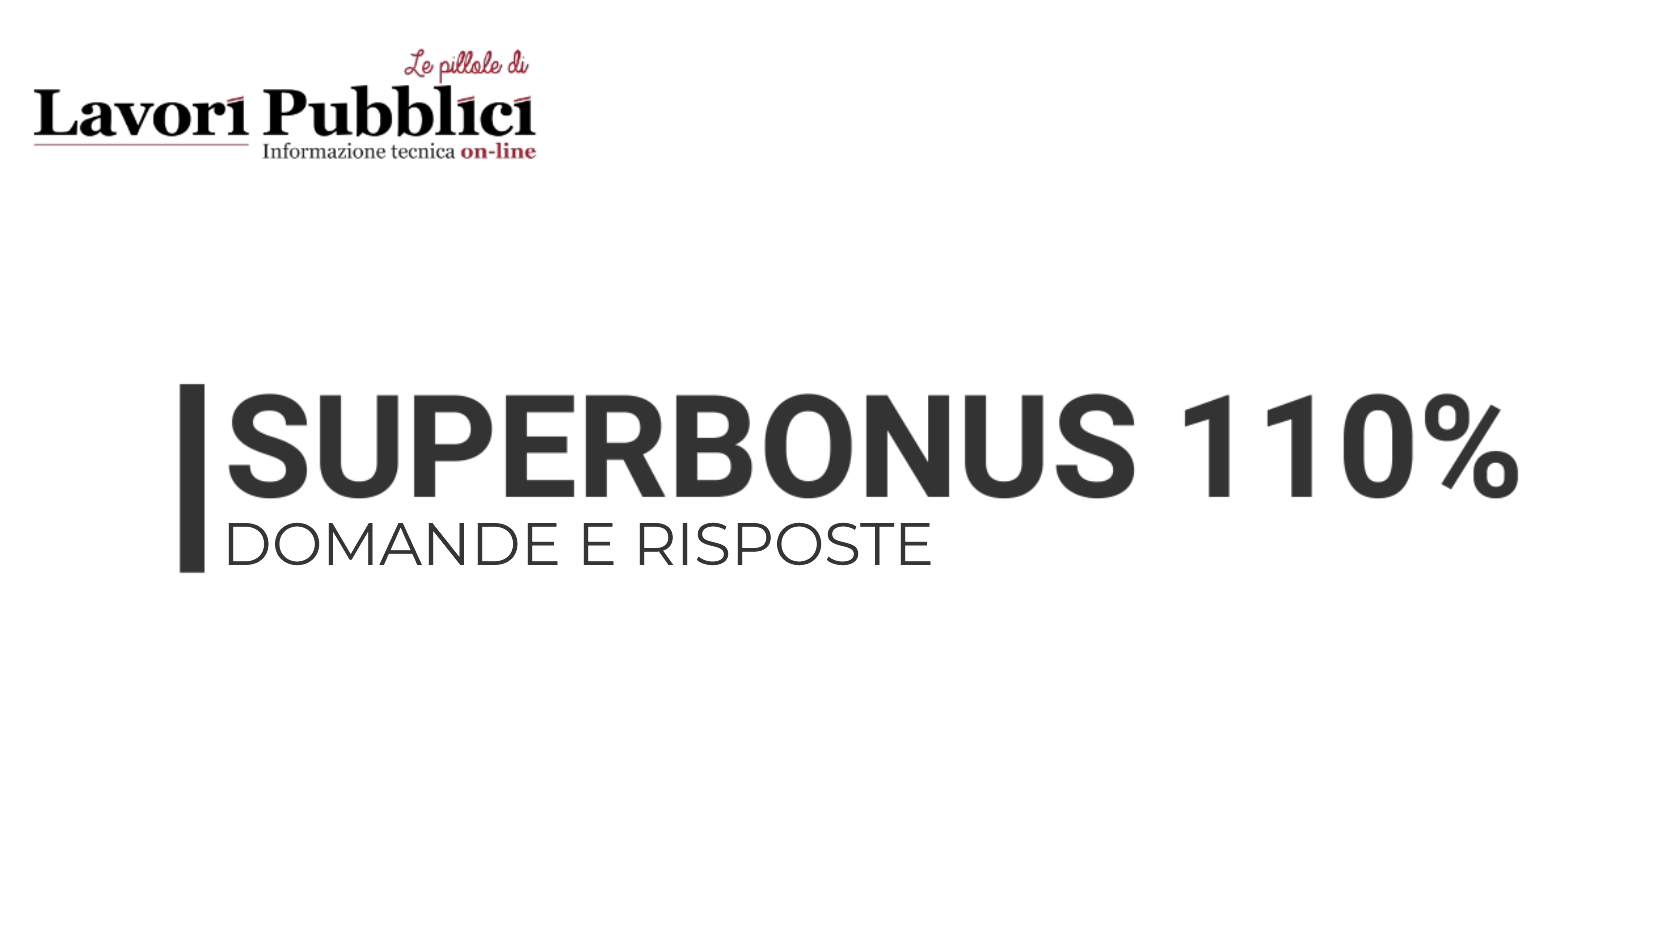 SUPERBONUS 110% - Domande e risposte